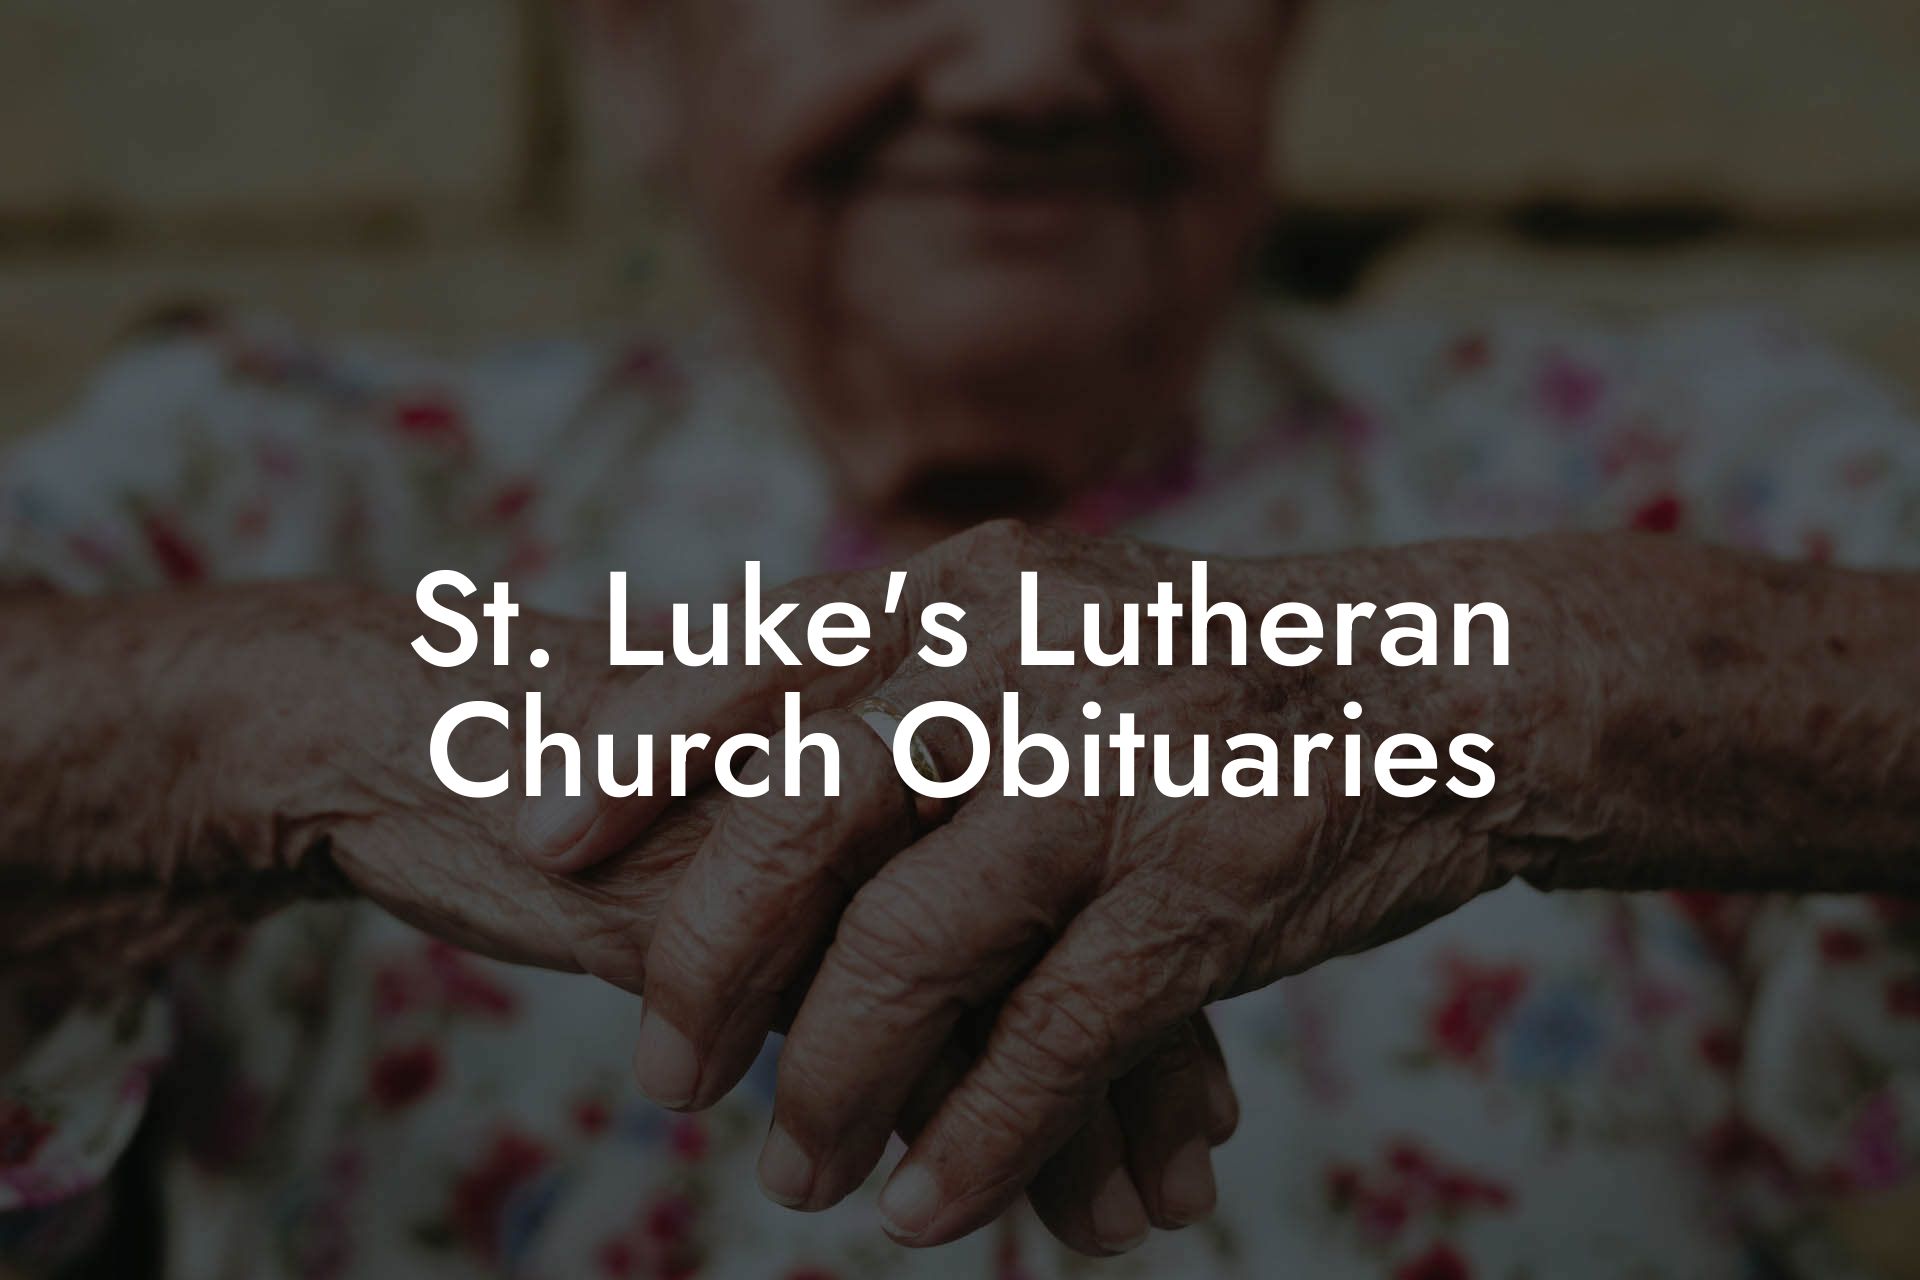 St. Luke's Lutheran Church Obituaries